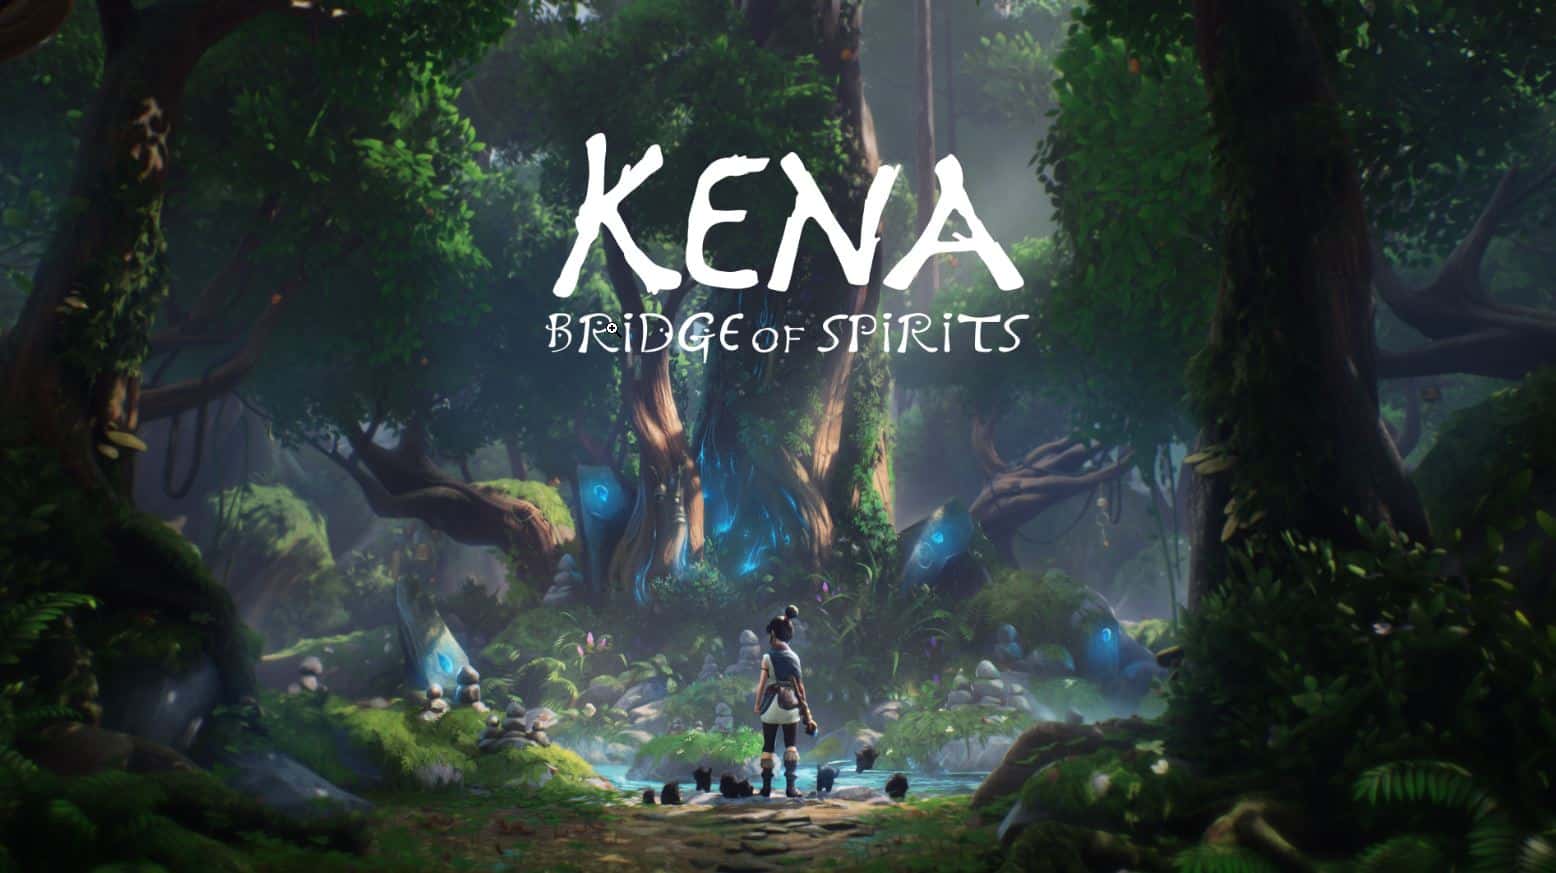 Le jeu next-gen Kena: Bridge of Spirits repousse sa sortie au premier trimestre 2021